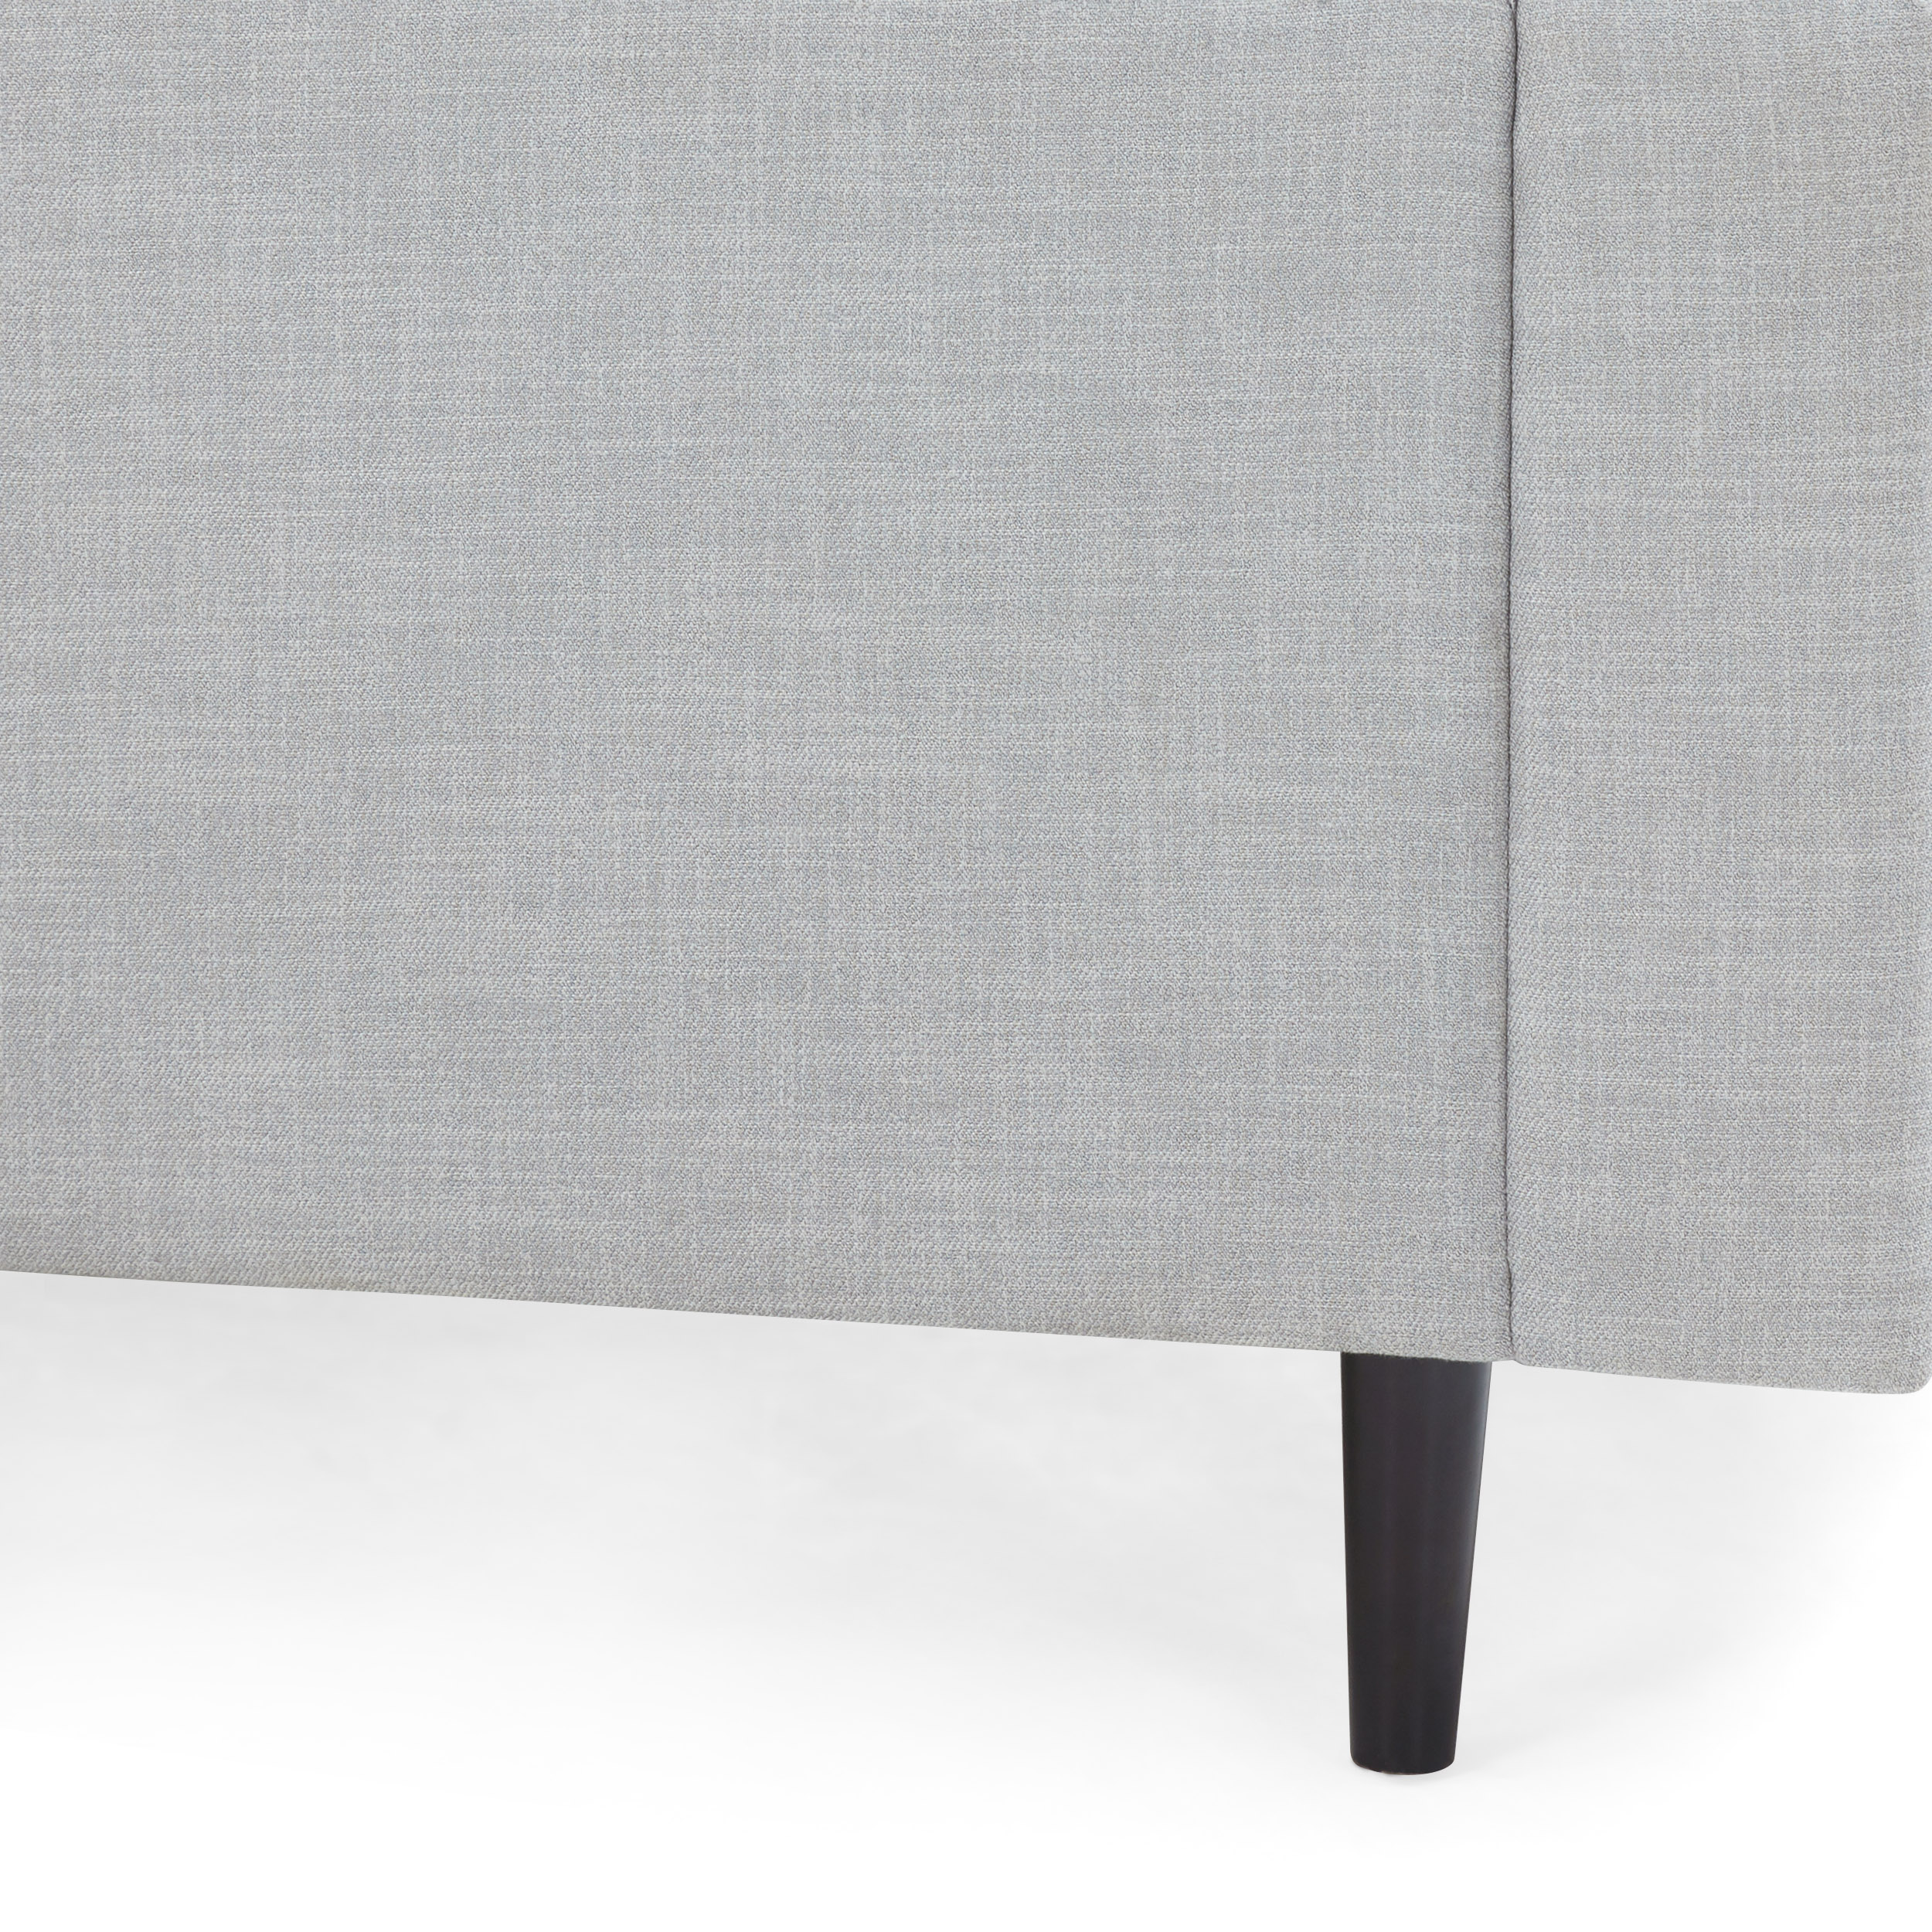 Lagom Fabric Upholstered Sofa, Light Gray, Dark Brown - image 5 of 9